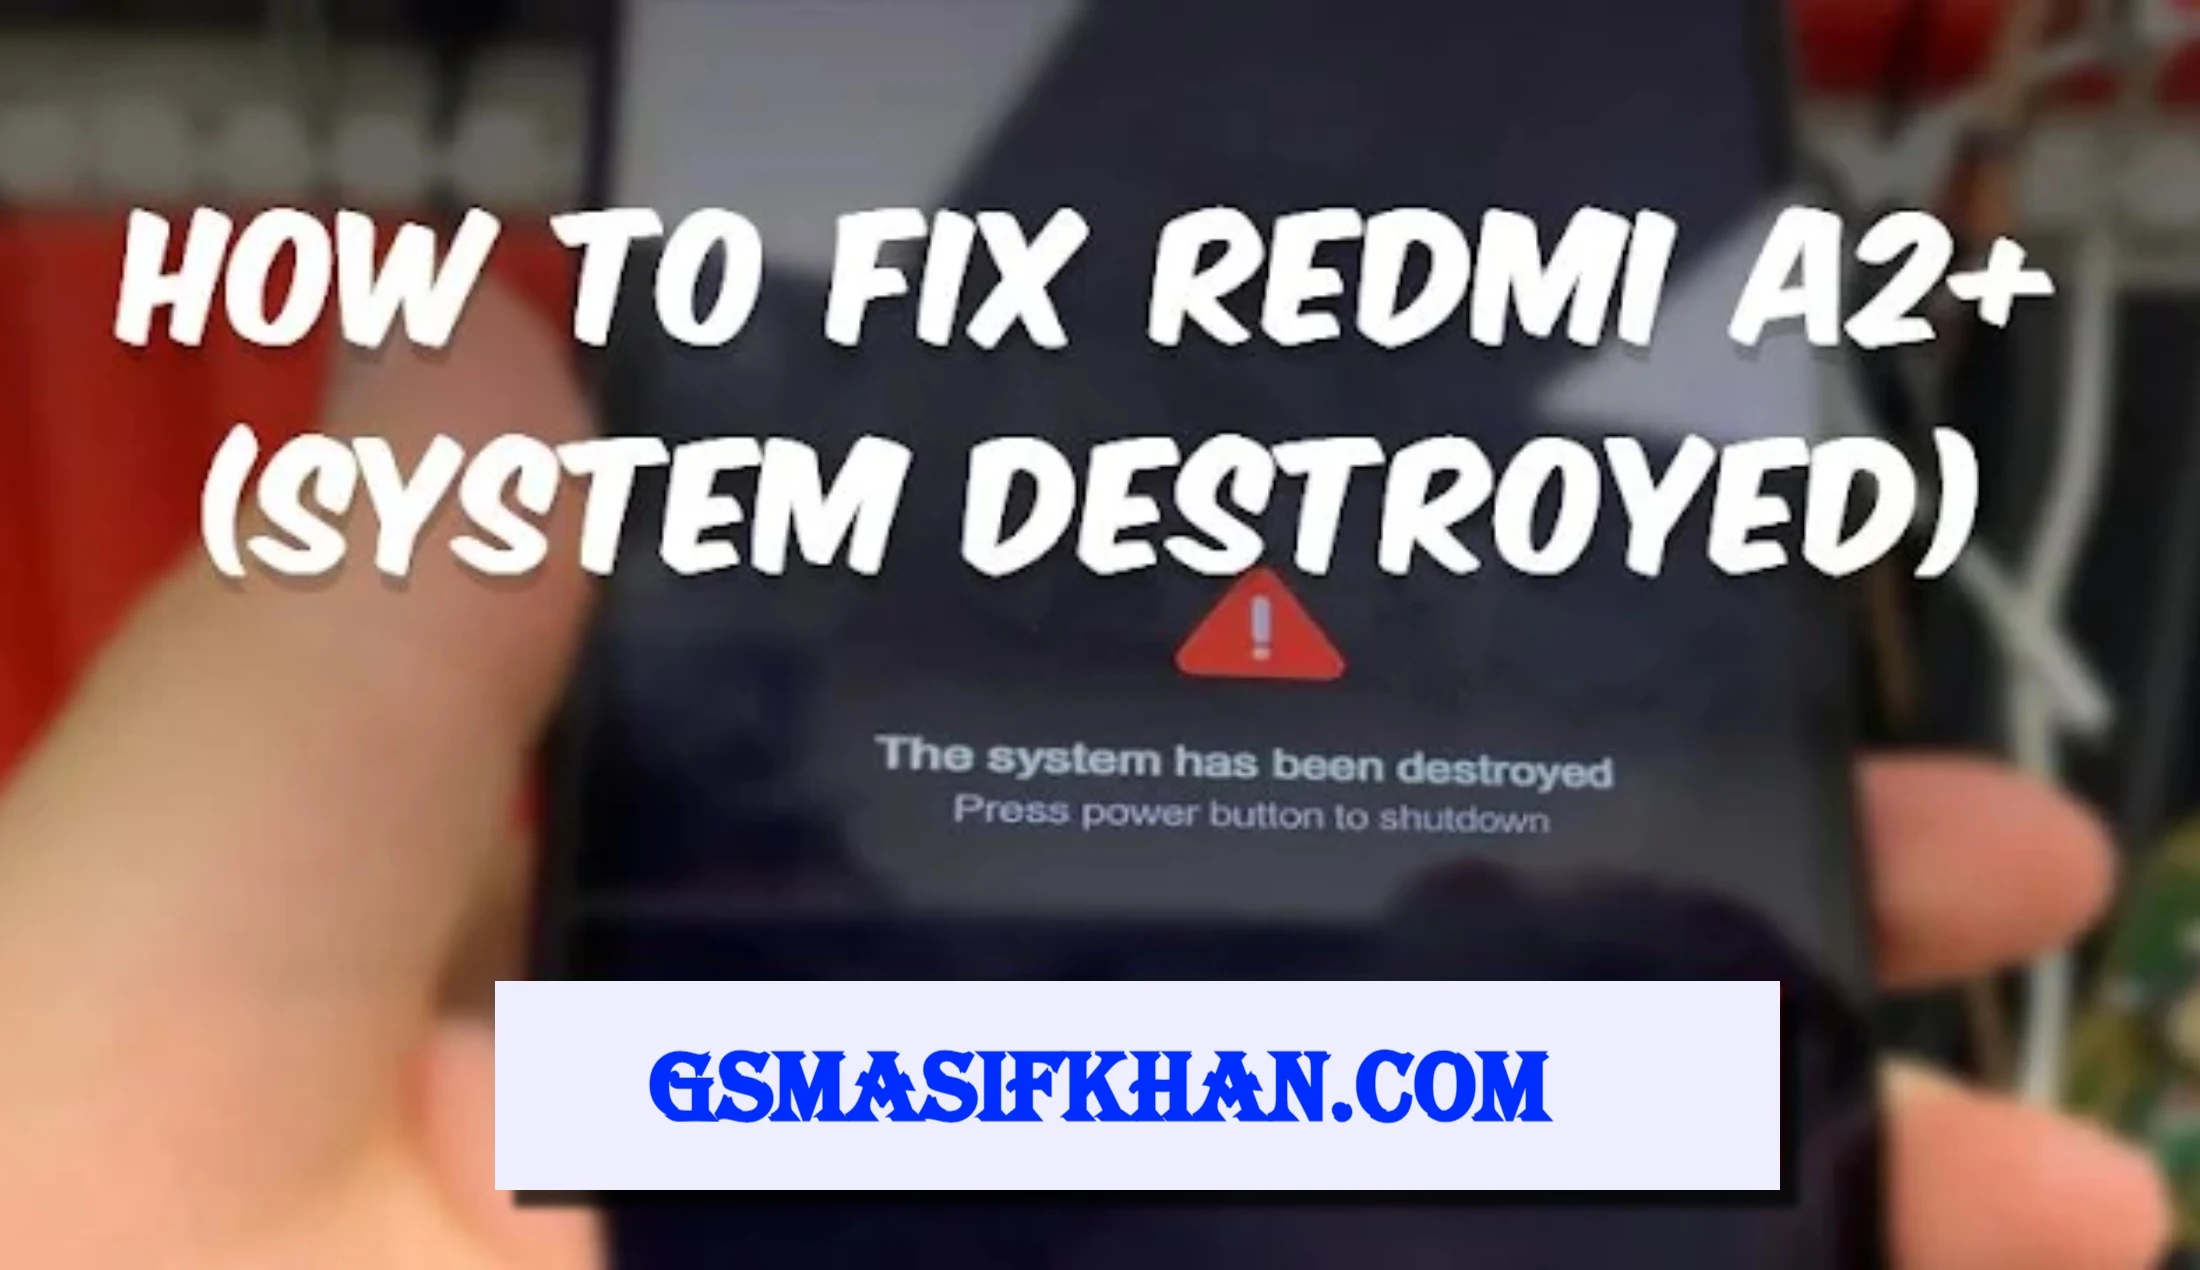 Redmi A2+ 'System Destroyed'